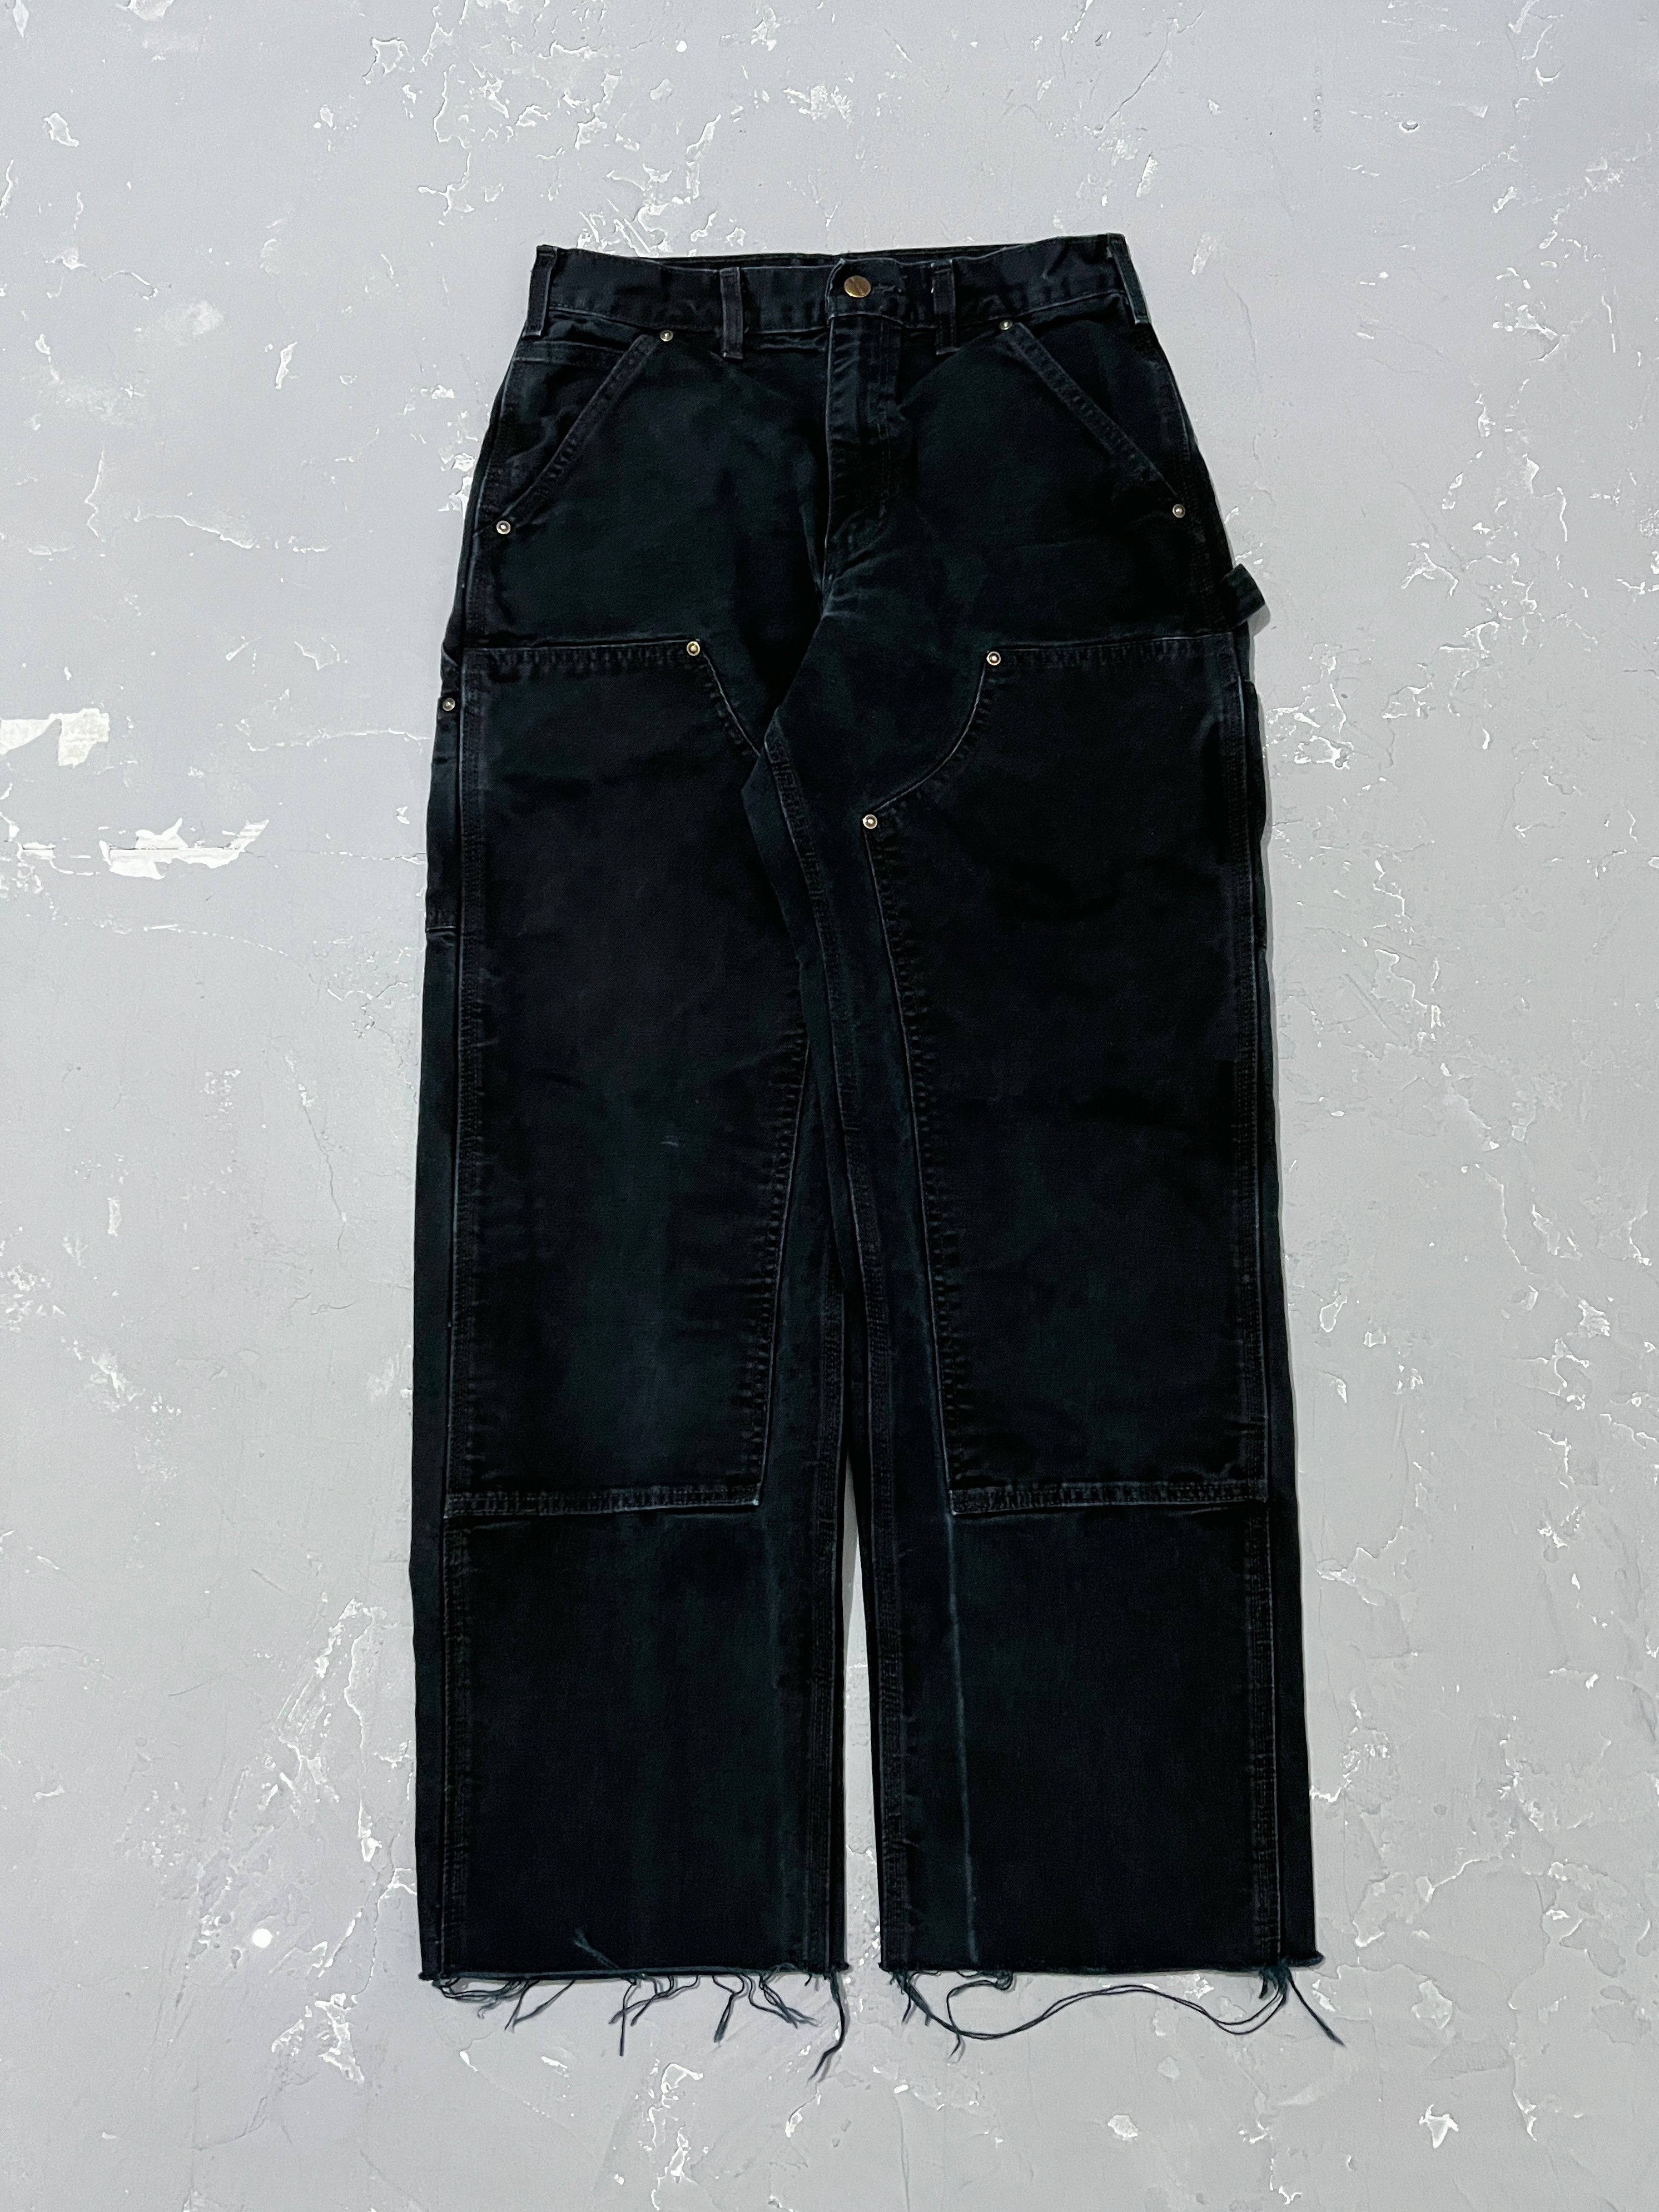 Carhartt Black Double Knee Pants [29 x 30]